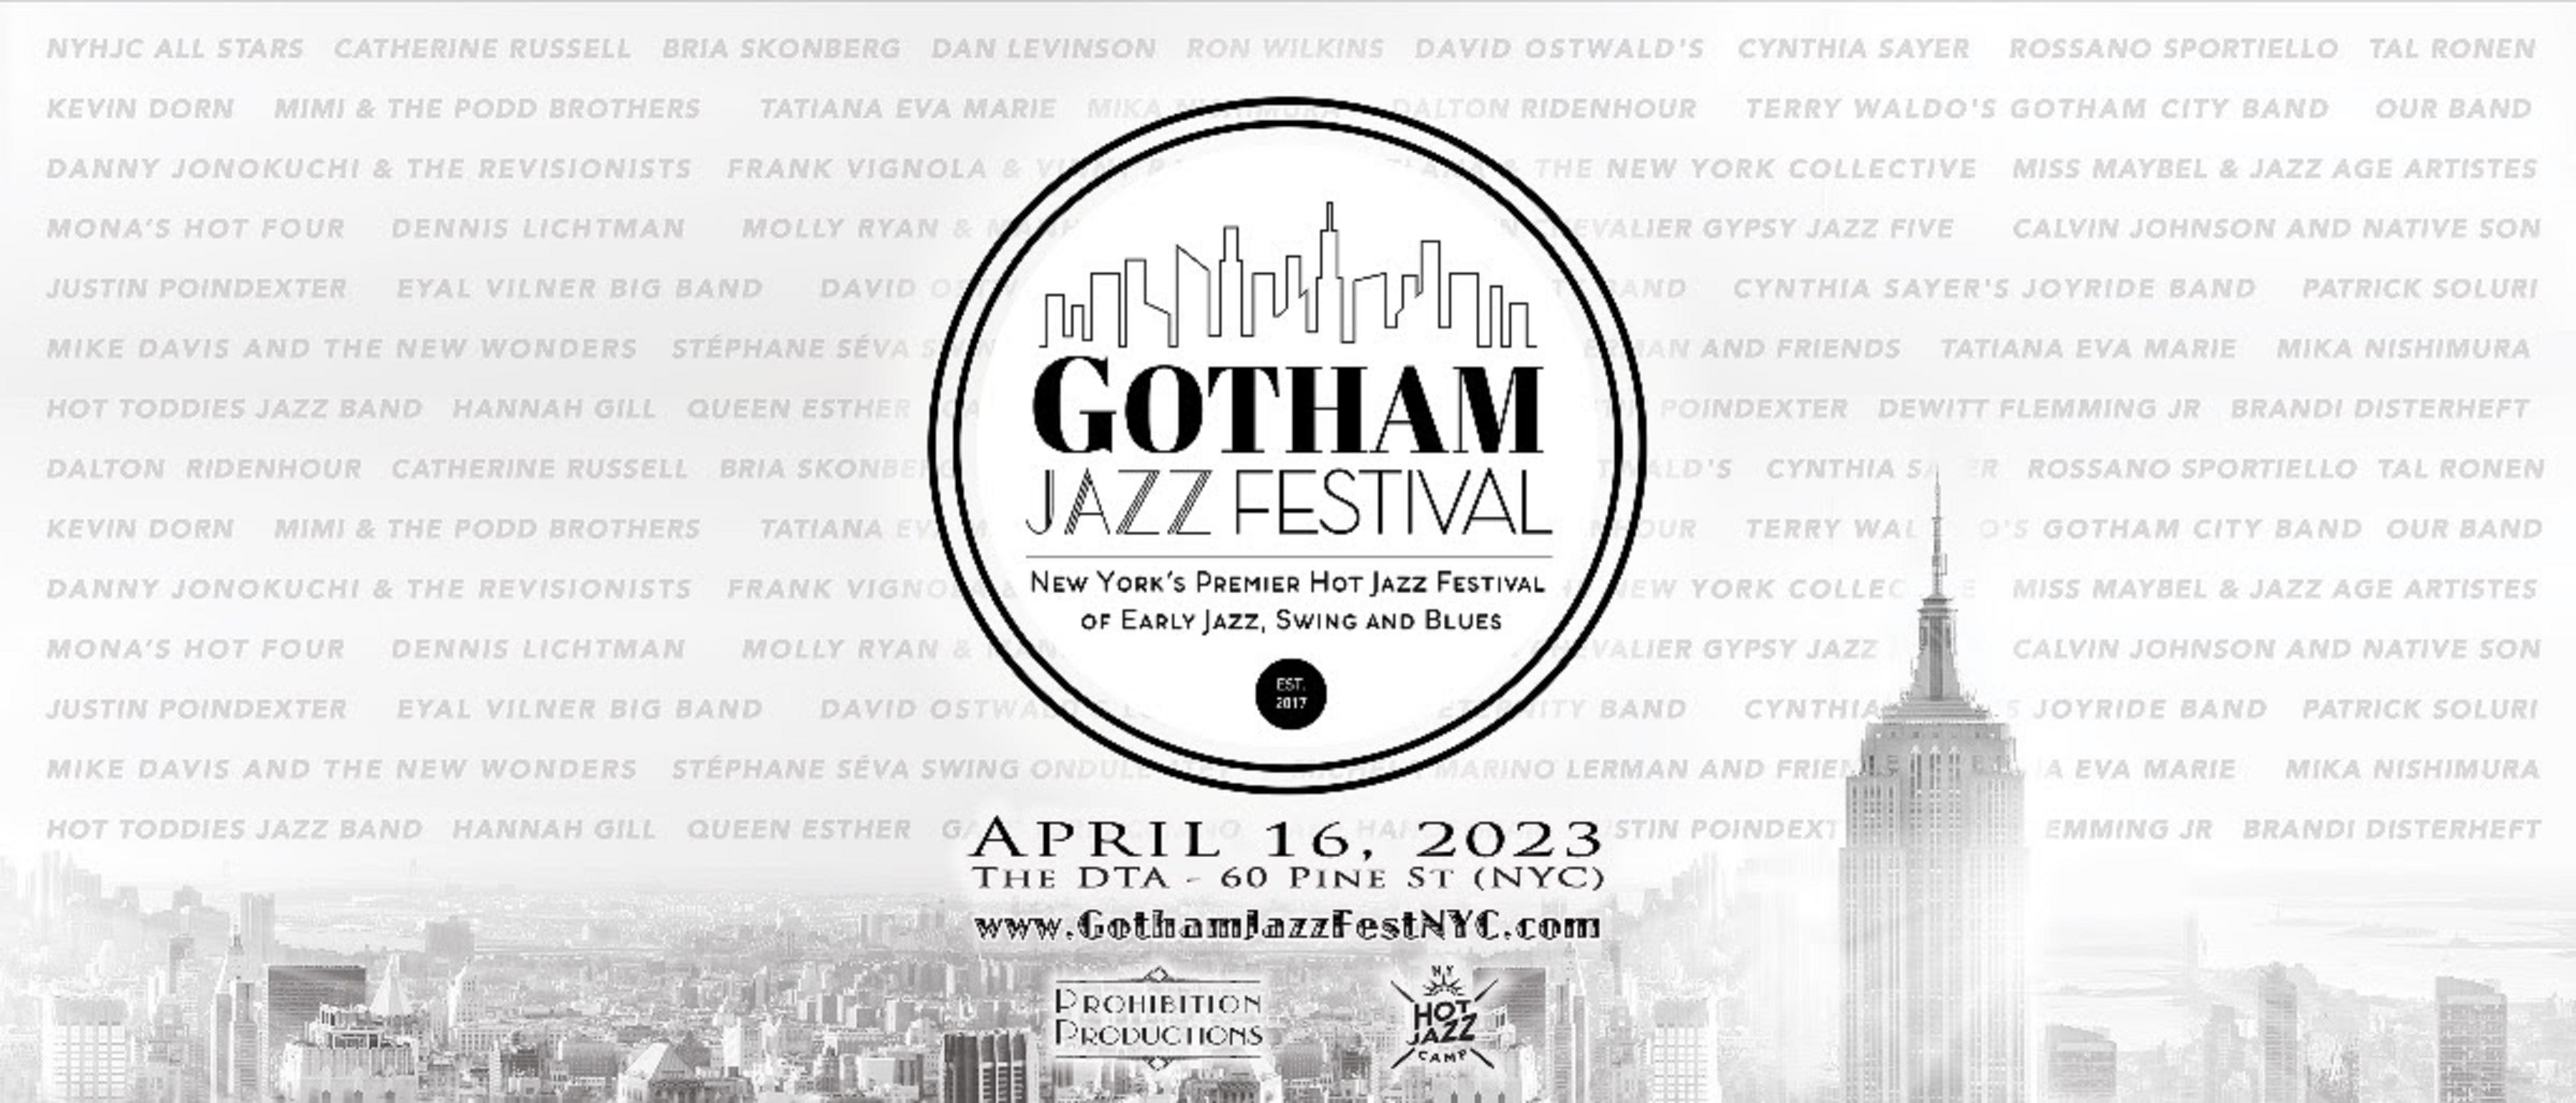 Gotham Jazz Festival is Sunday April 16th